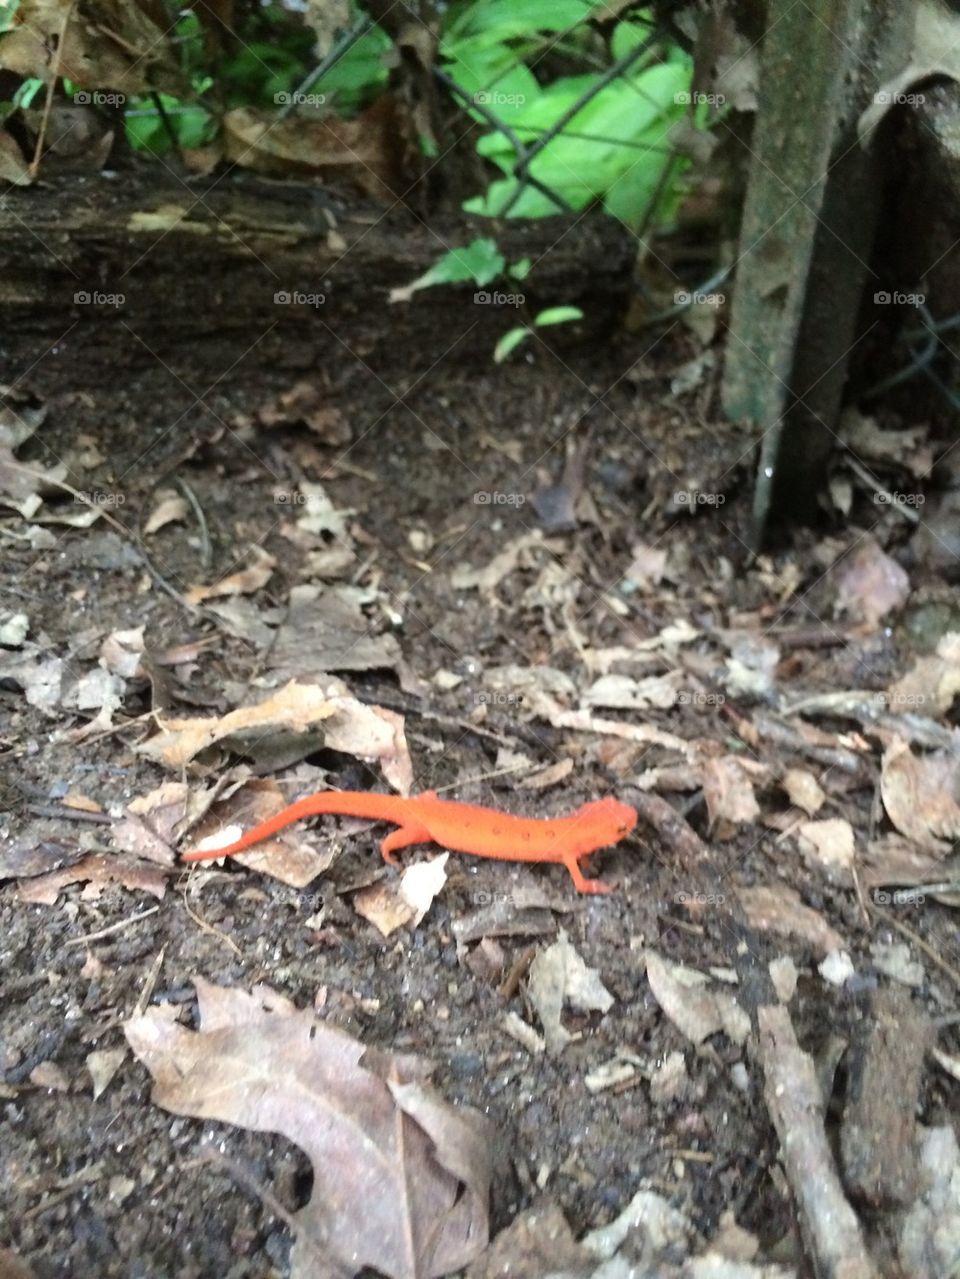 Red Dog Salamander